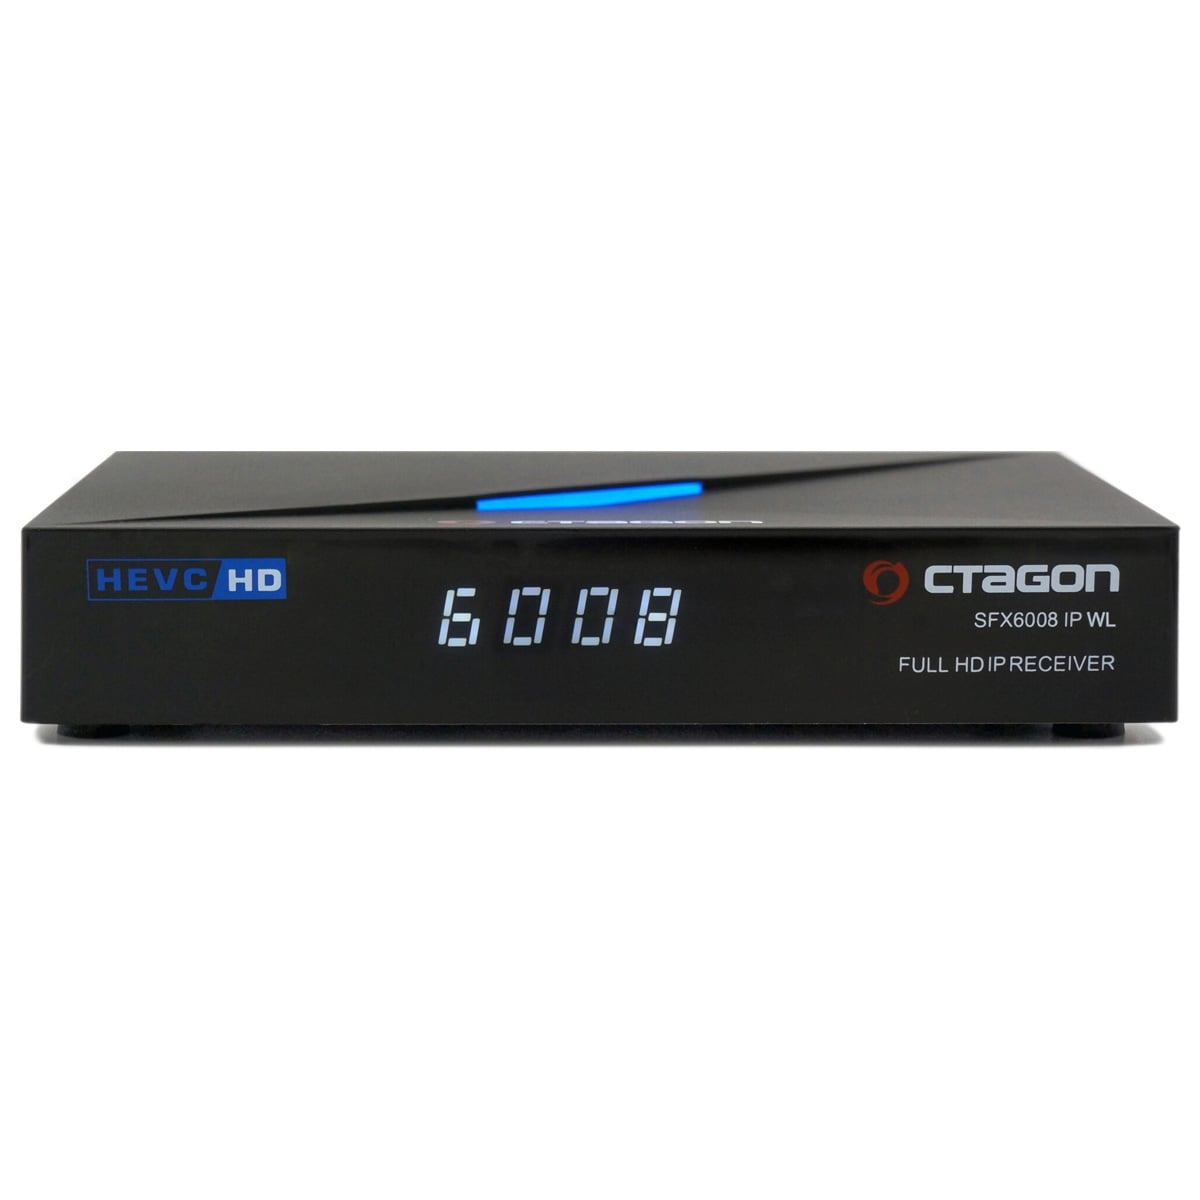 OCTAGON SFX6008 WL IP 512 MB